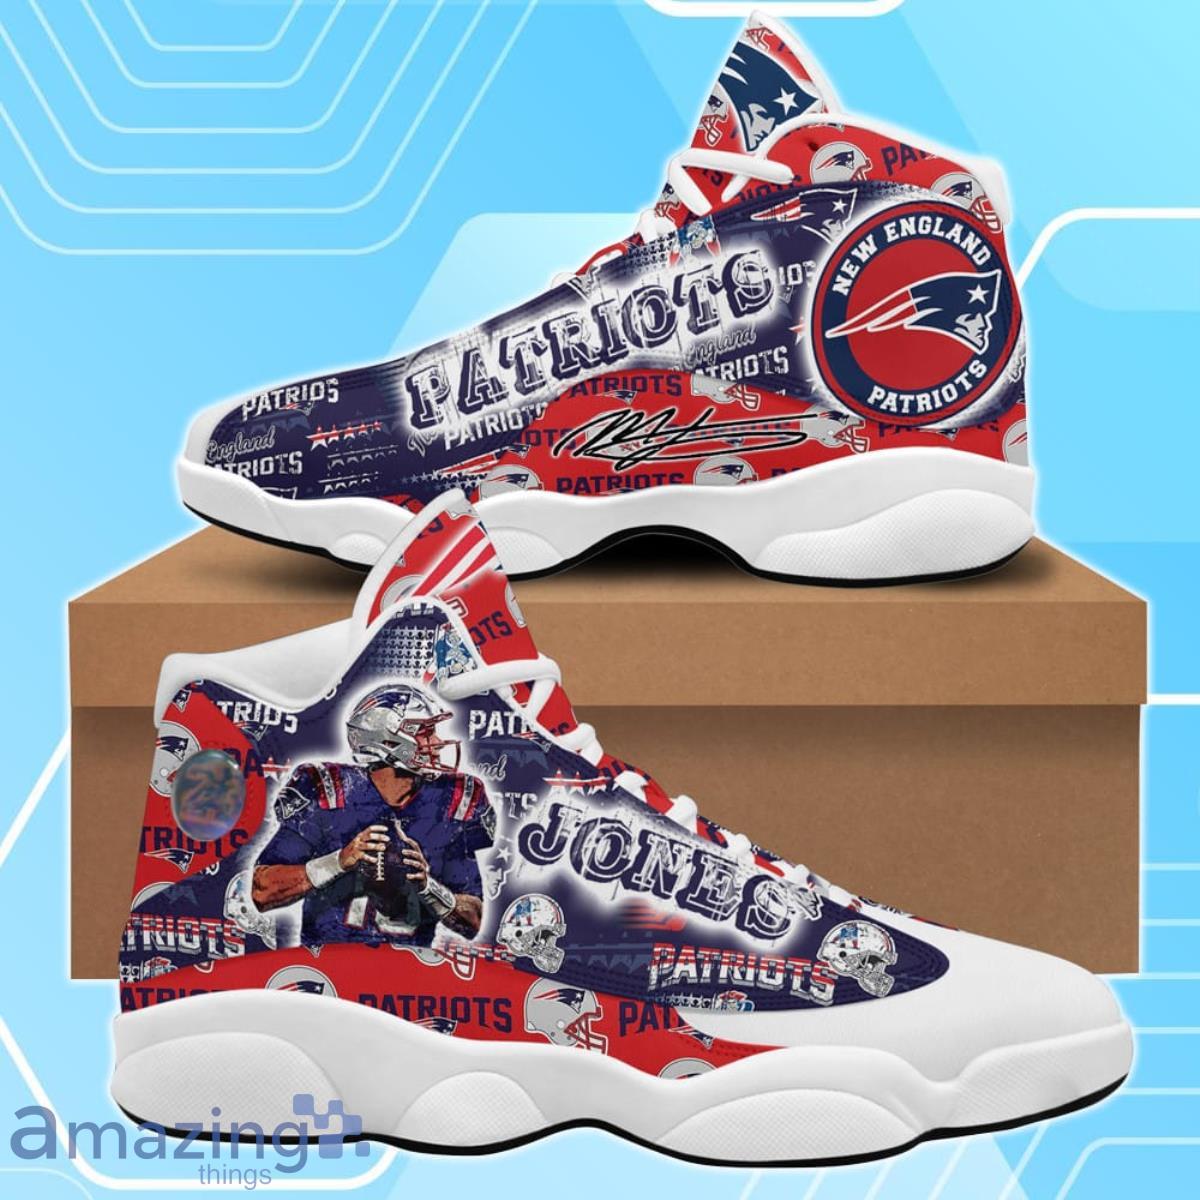 New England Patriots Mac Jones Air Jordan 13 Shoes For Men Women Product Photo 1